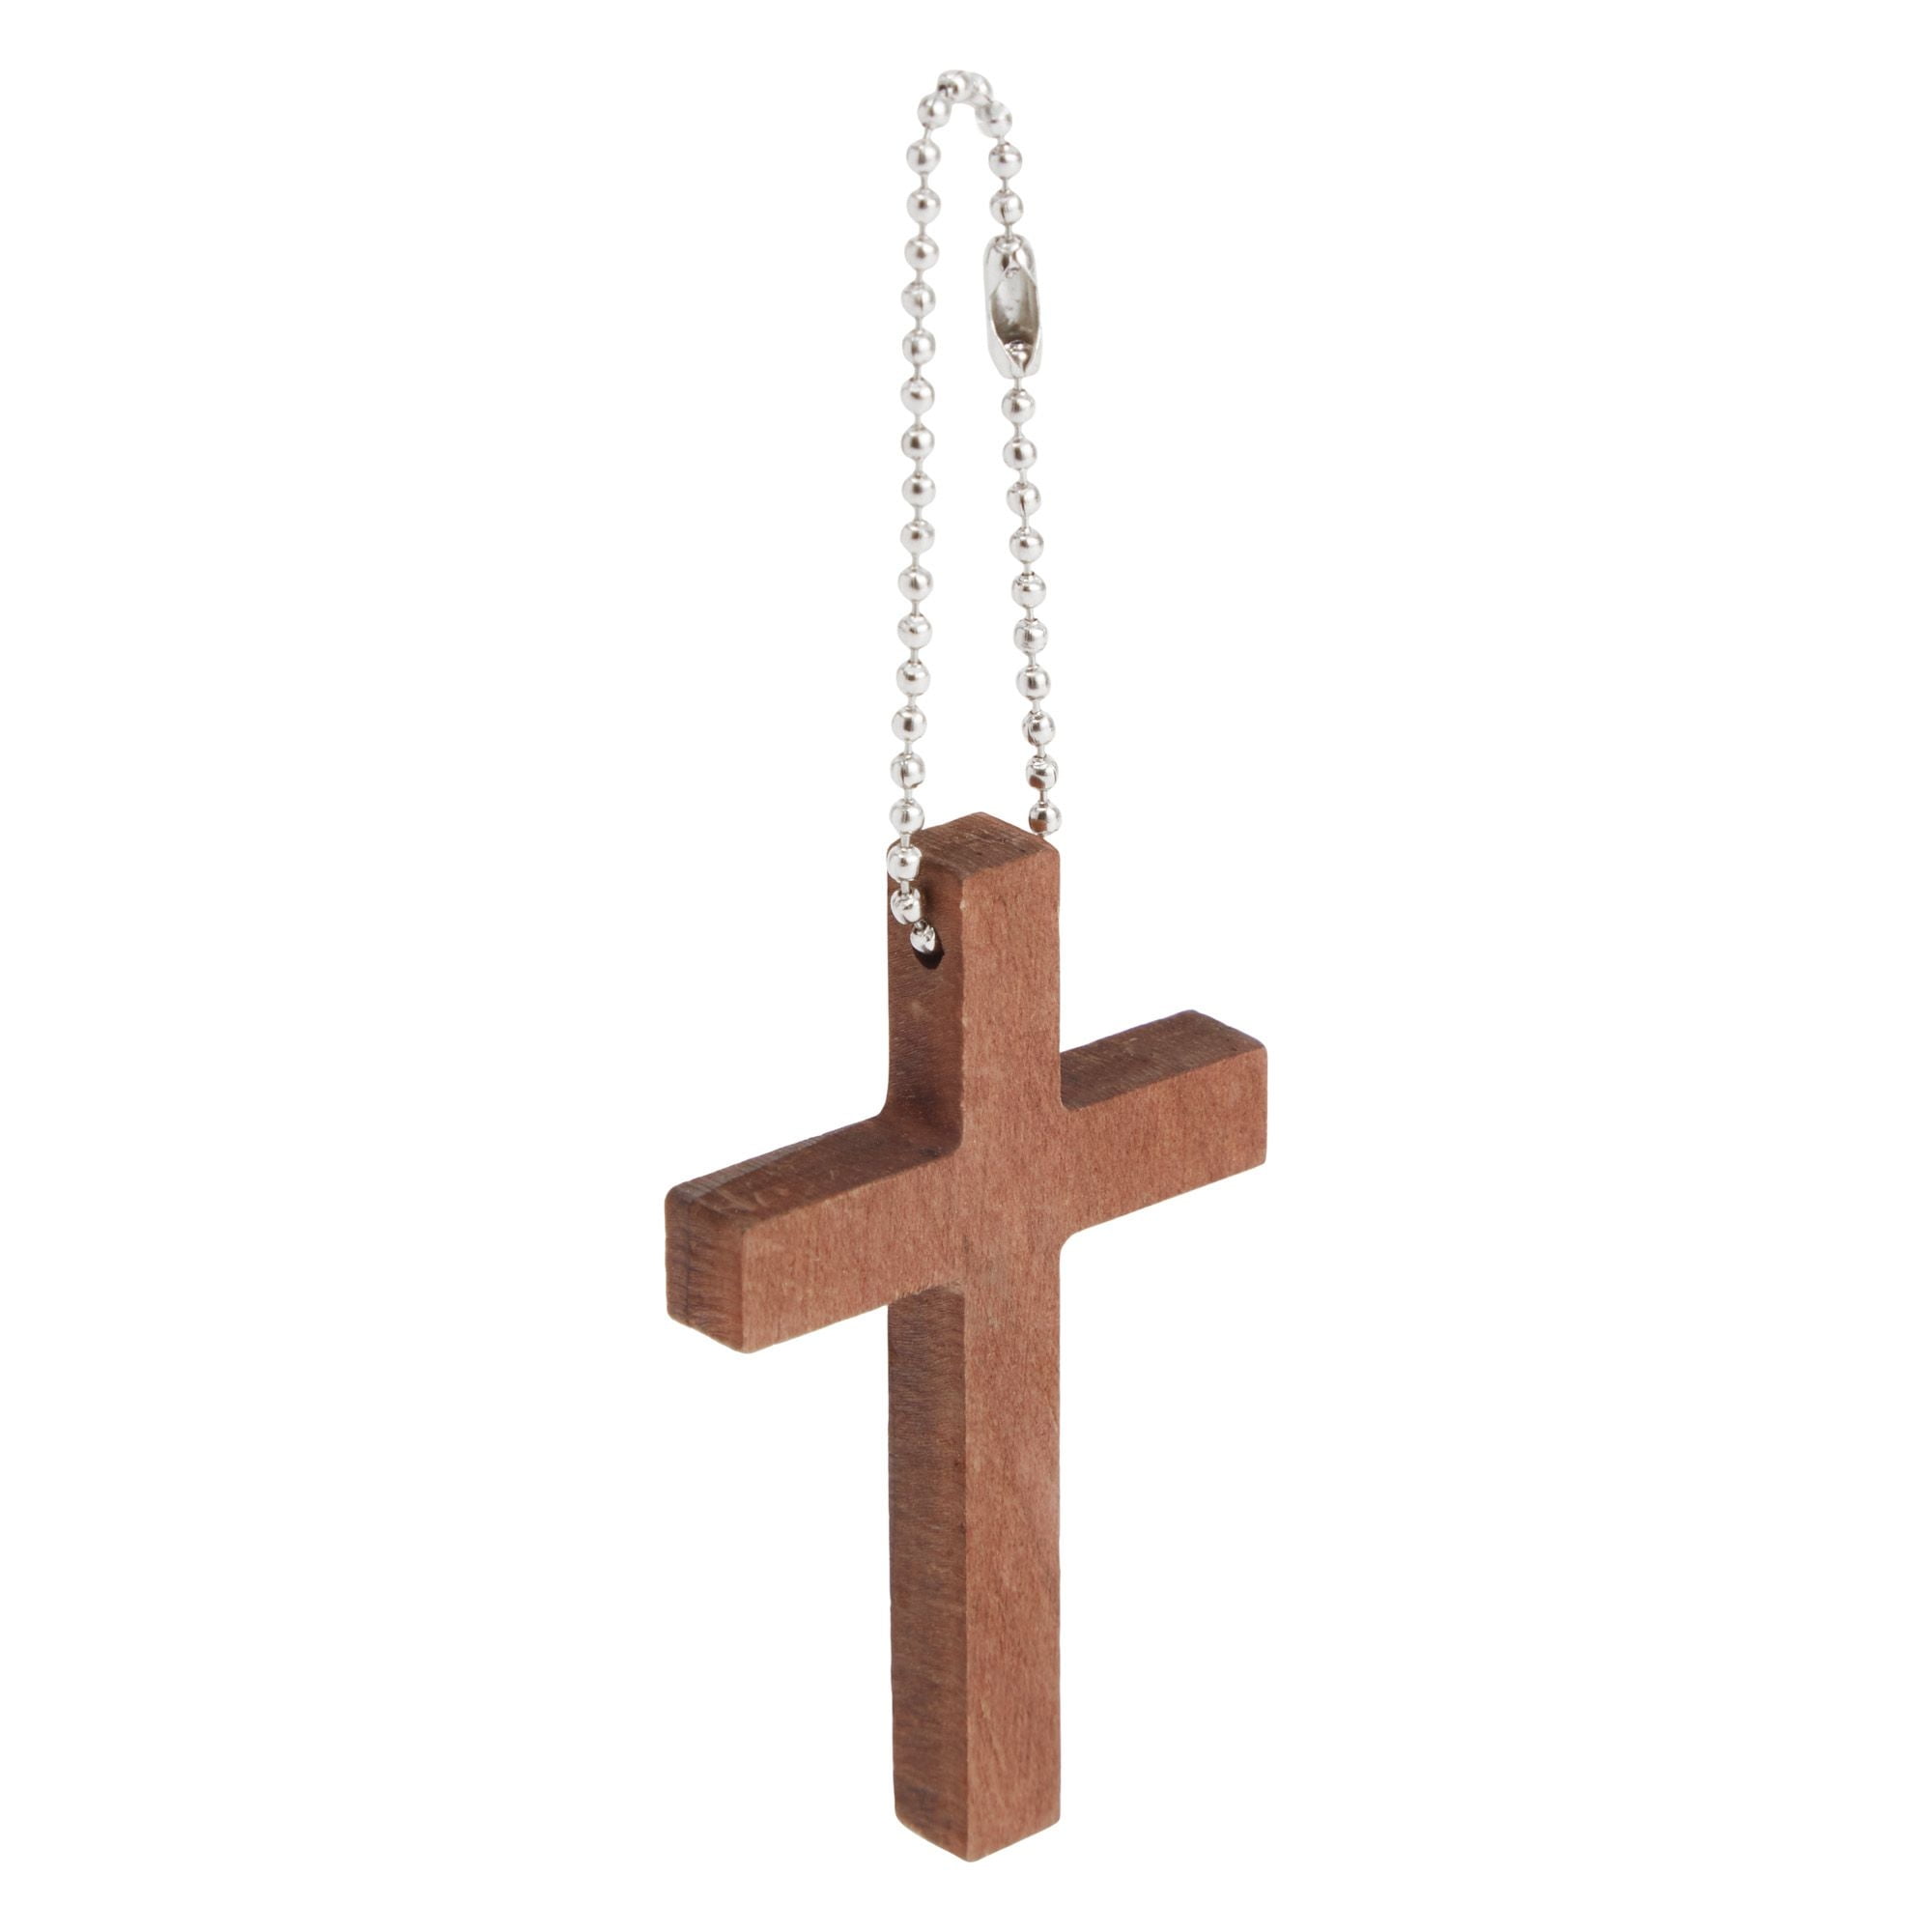 Wooden Cross Keychain - Century Farm Crosses